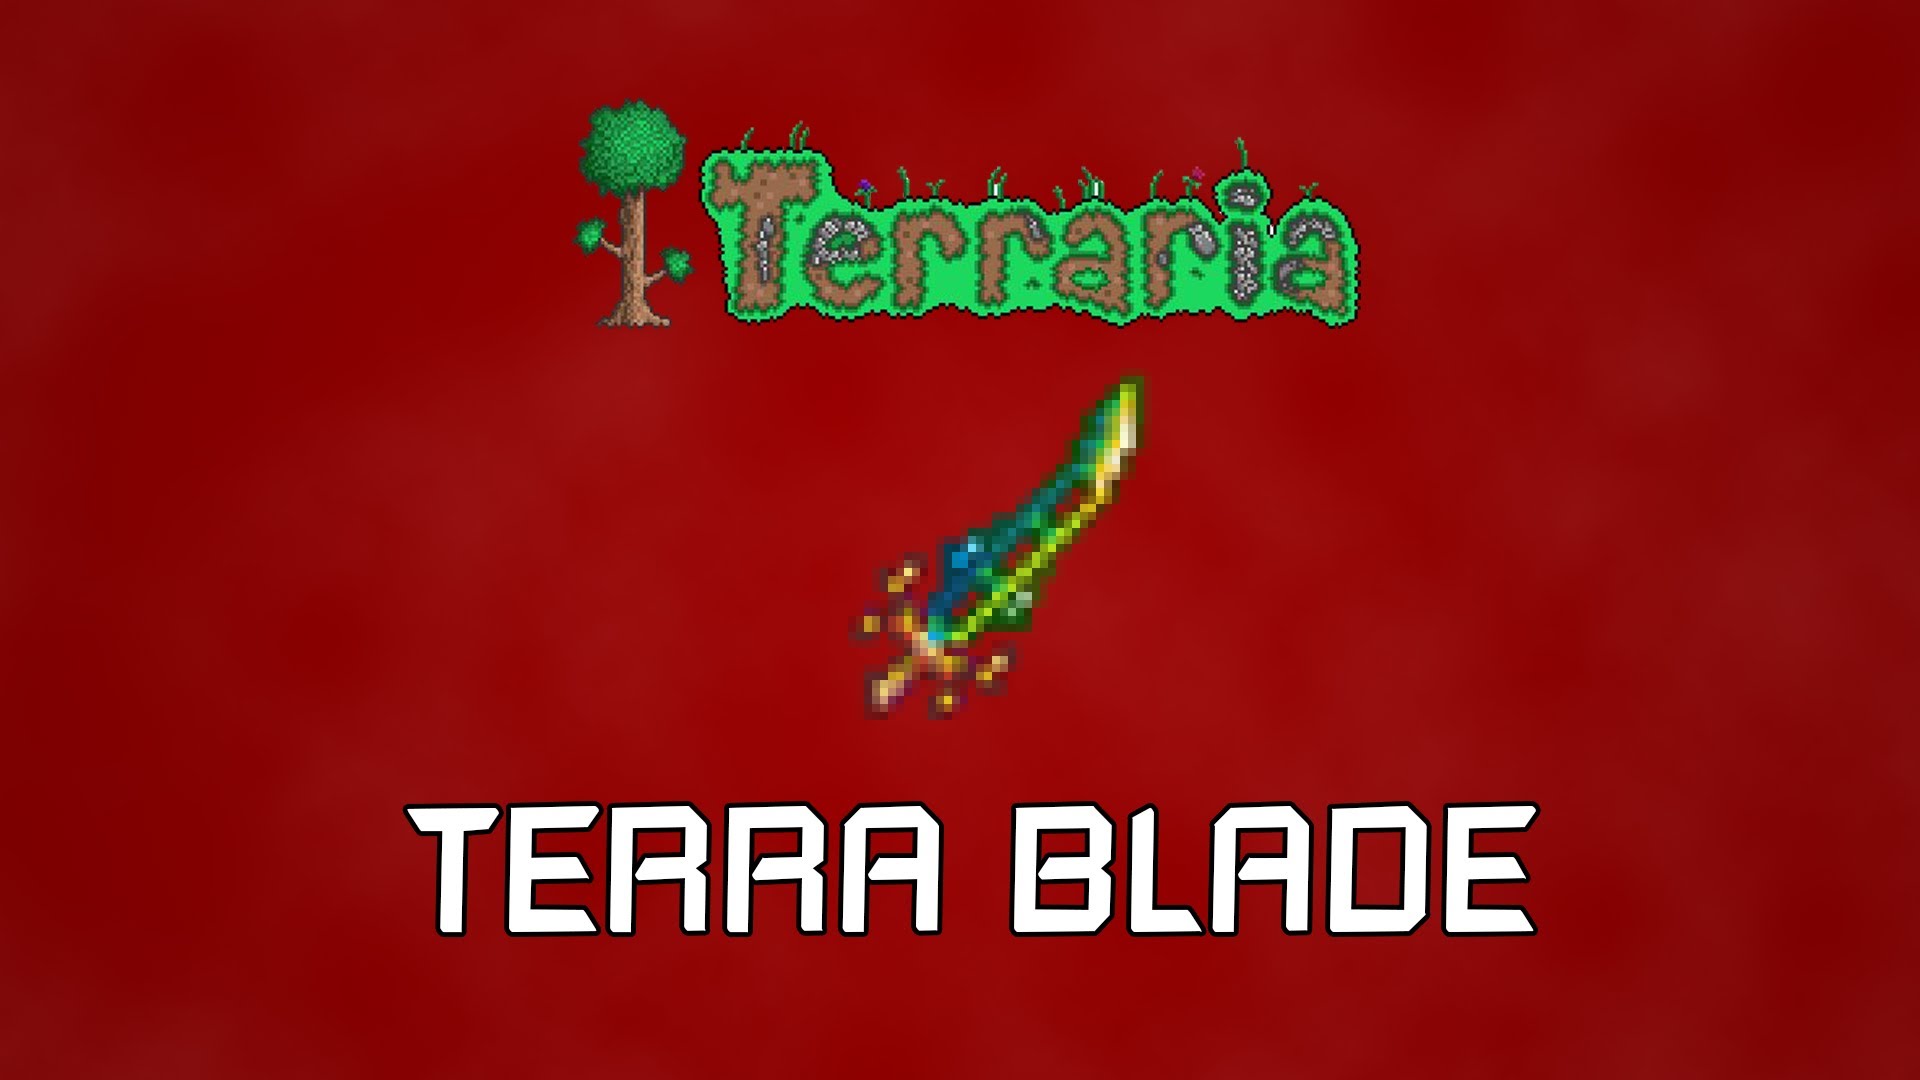 Terra blade in terraria фото 14